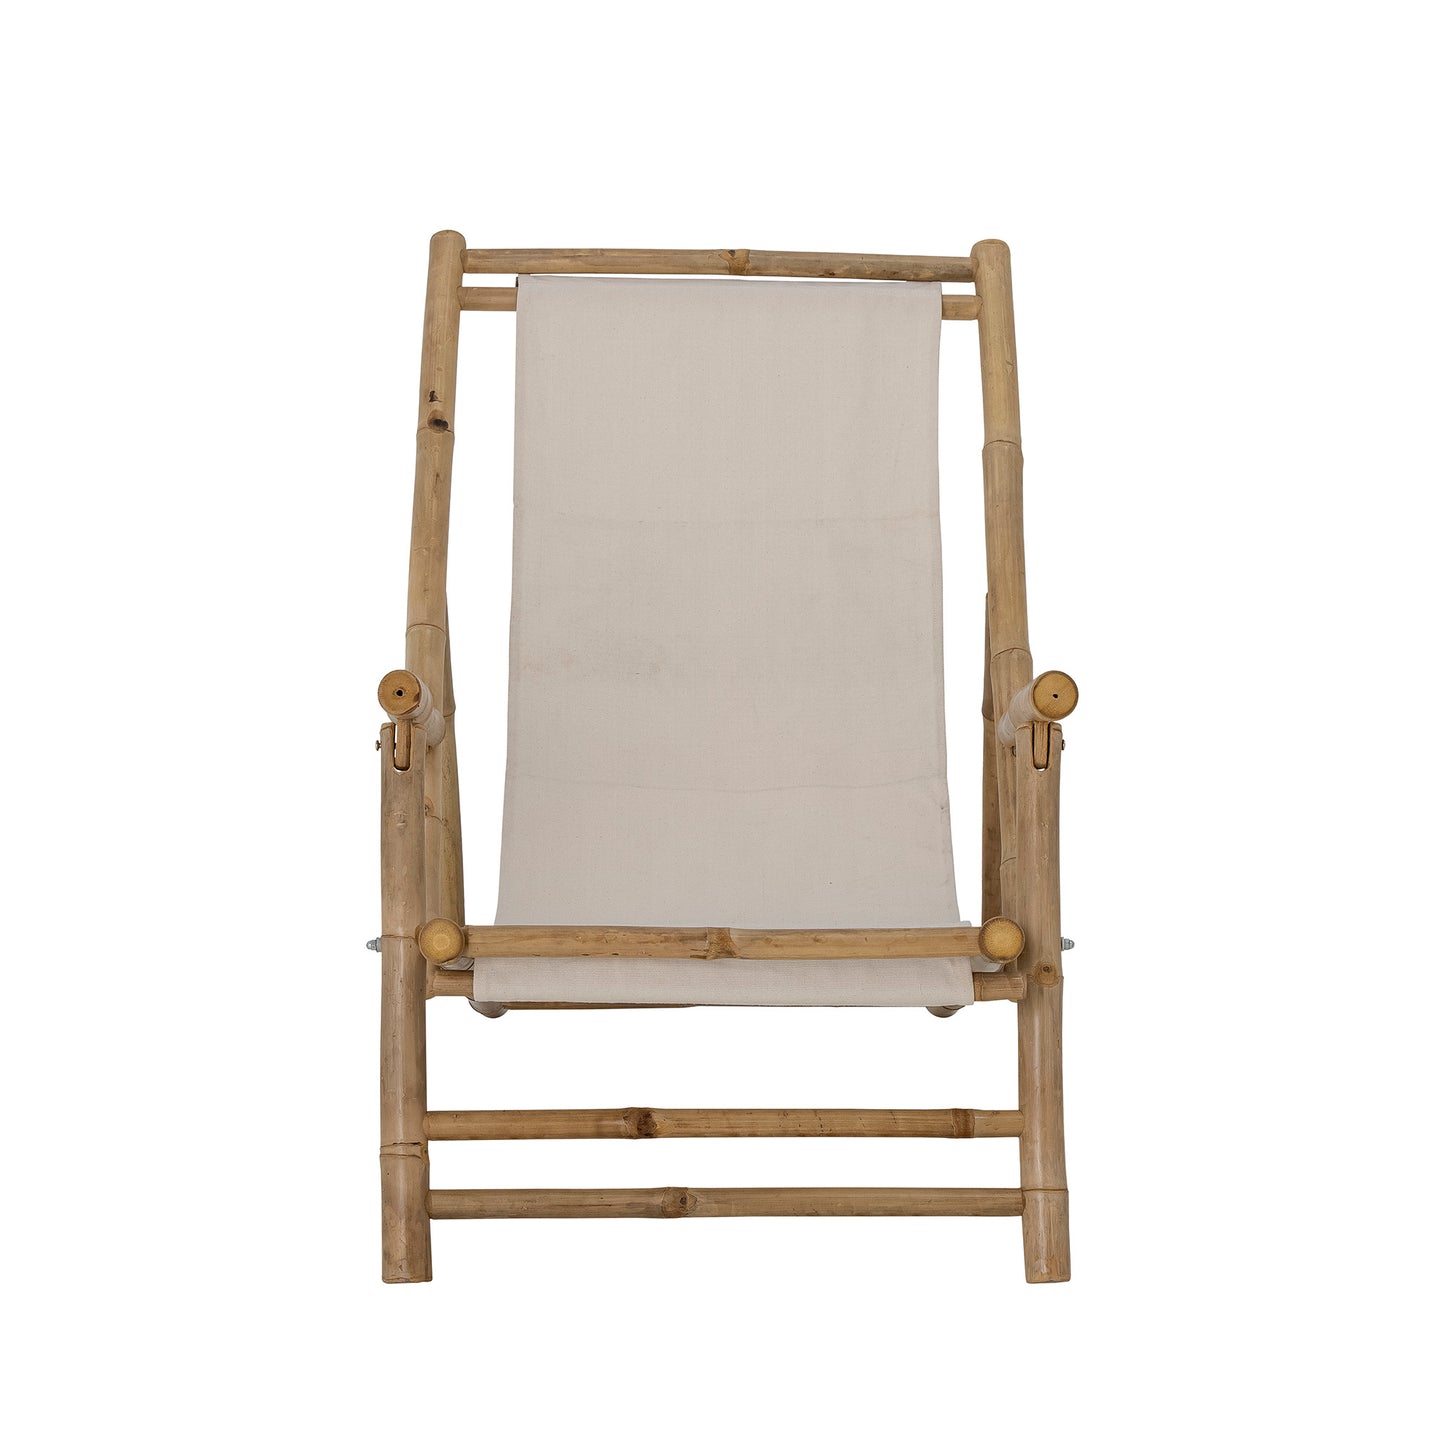 Bloomingville Outdoor Korfu Bamboo Deck Chair in Natural